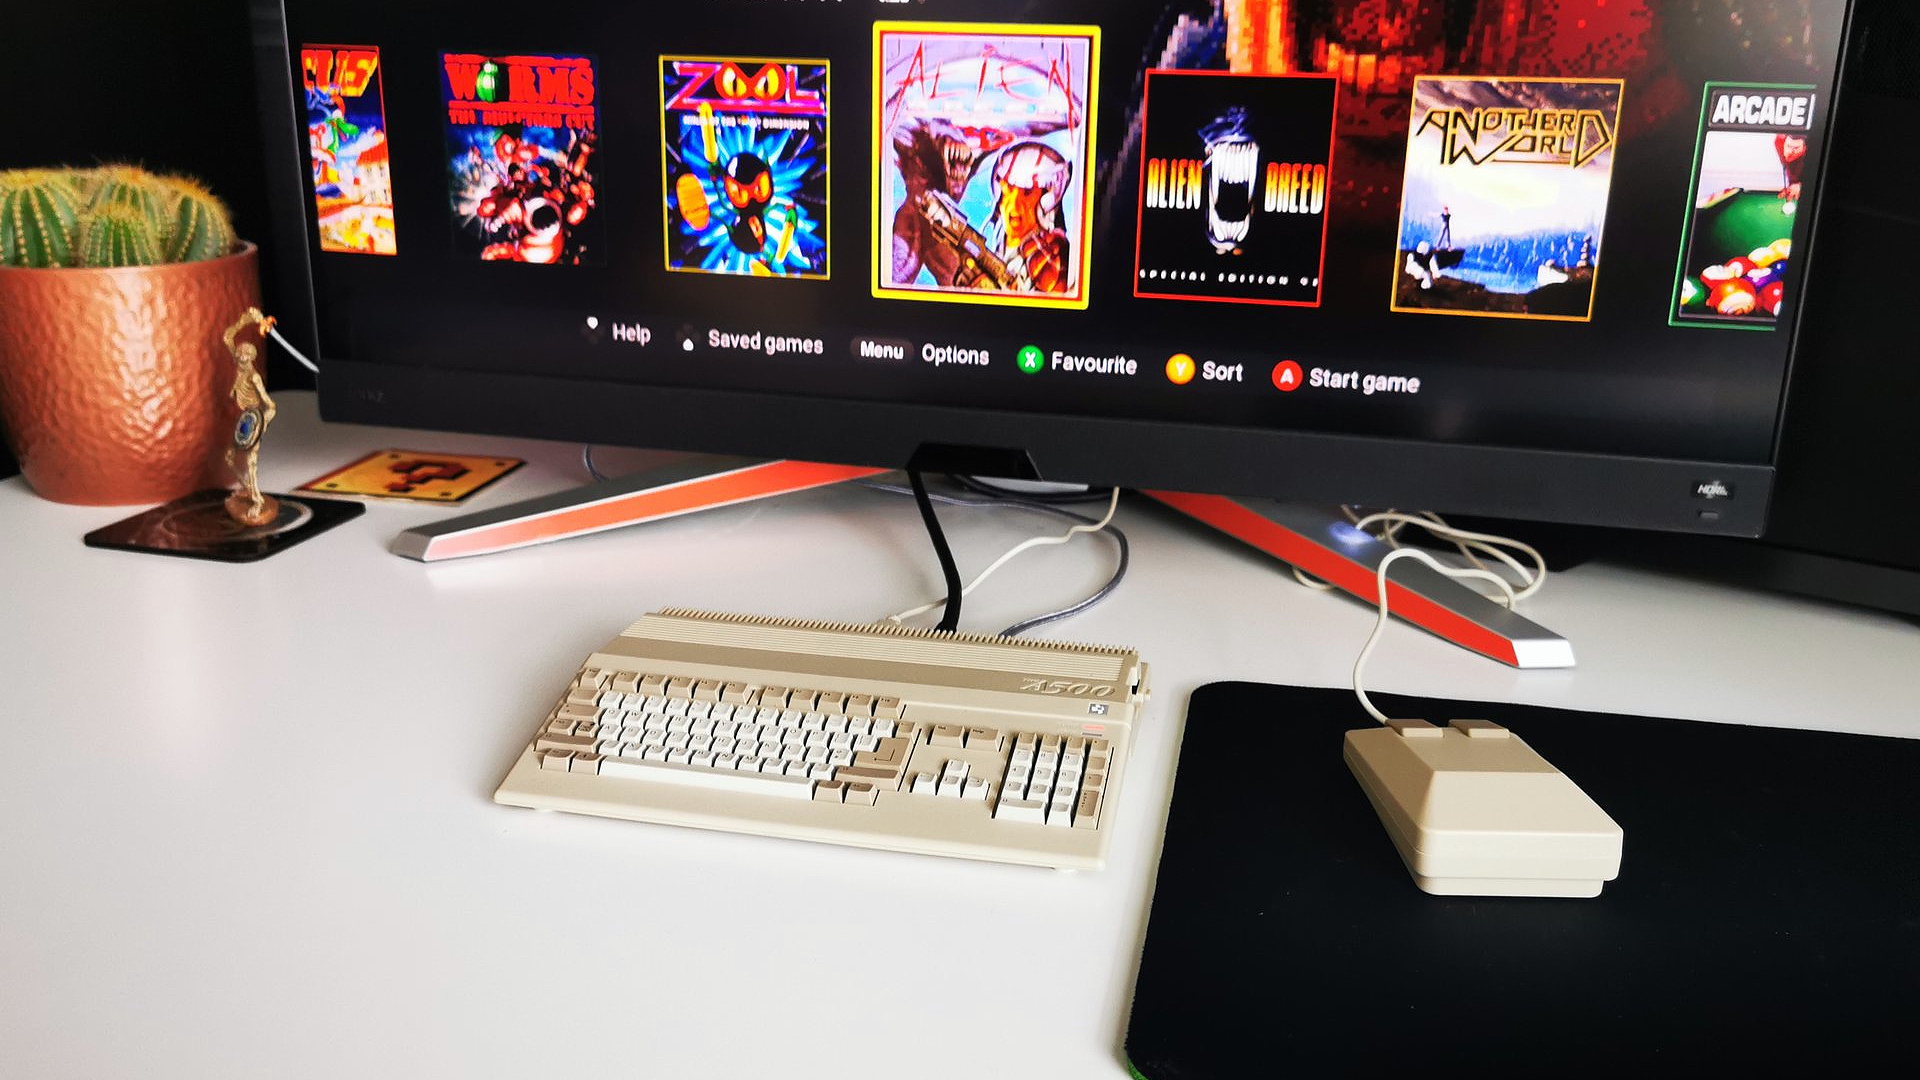 Plug and Play USB Stick Expansion Pack For Amiga 500 Mini Retro